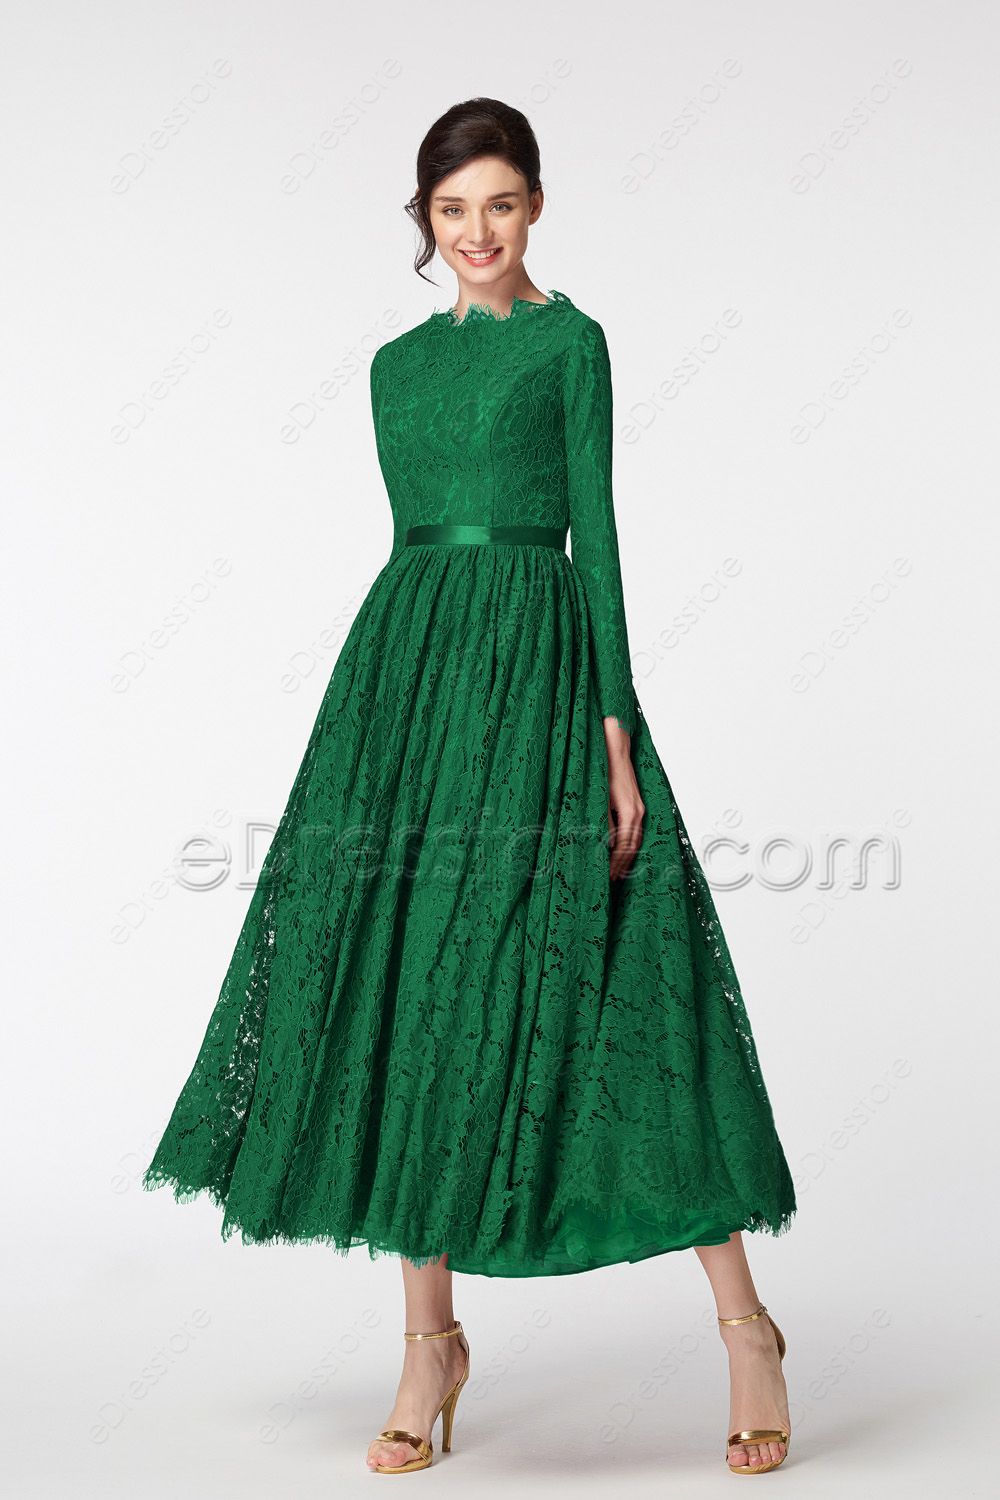 emerald green cocktail dresses